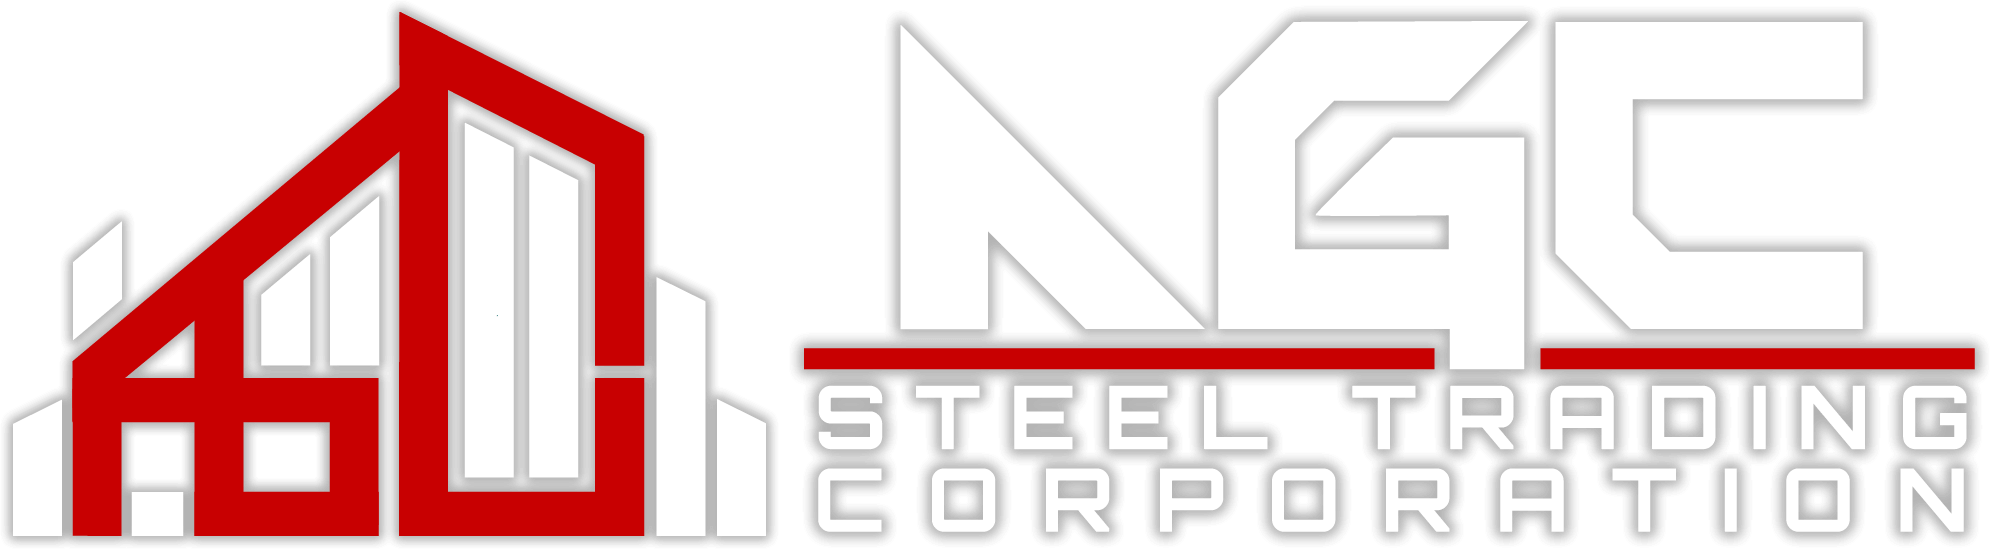 AGC Steel Trading Corporation